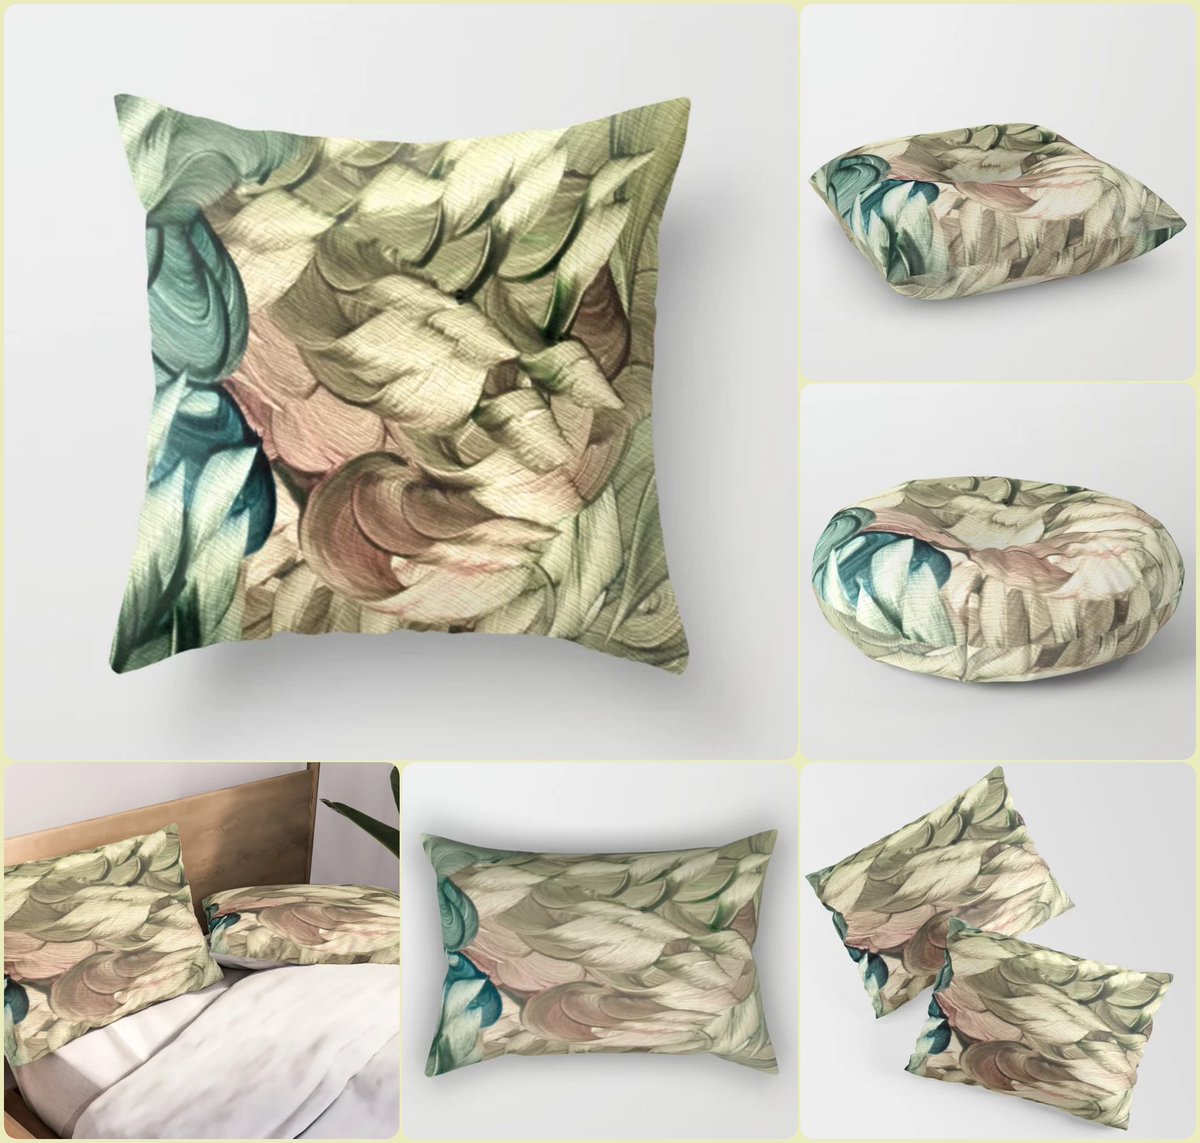 Atropos Throw Pillow~by Art Falaxy~
~Unique Pillows!~
#artfalaxy #art #bedroom #pillows #homedecor #society6 #Society6max #swirls #modern #trendy #accessories #accents #floorpillows #pillows #shams #blankets

society6.com/product/atropo…
COLLECTION: society6.com/art/atropos156…